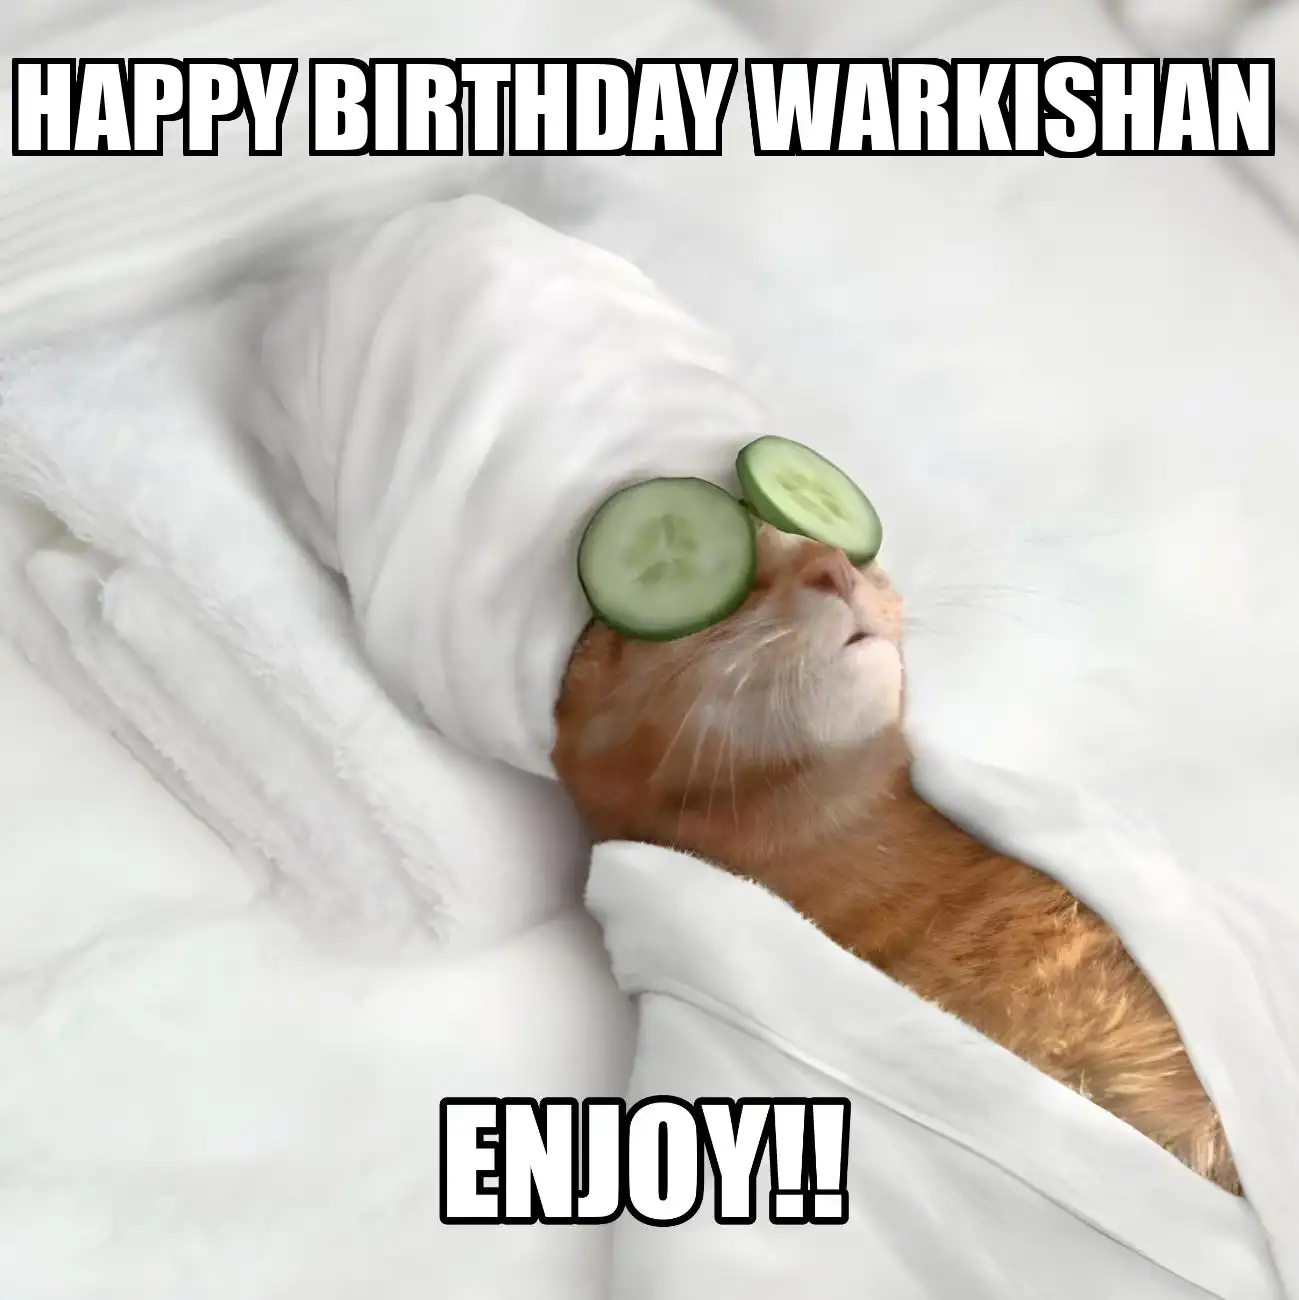 Happy Birthday Warkishan Enjoy Cat Meme